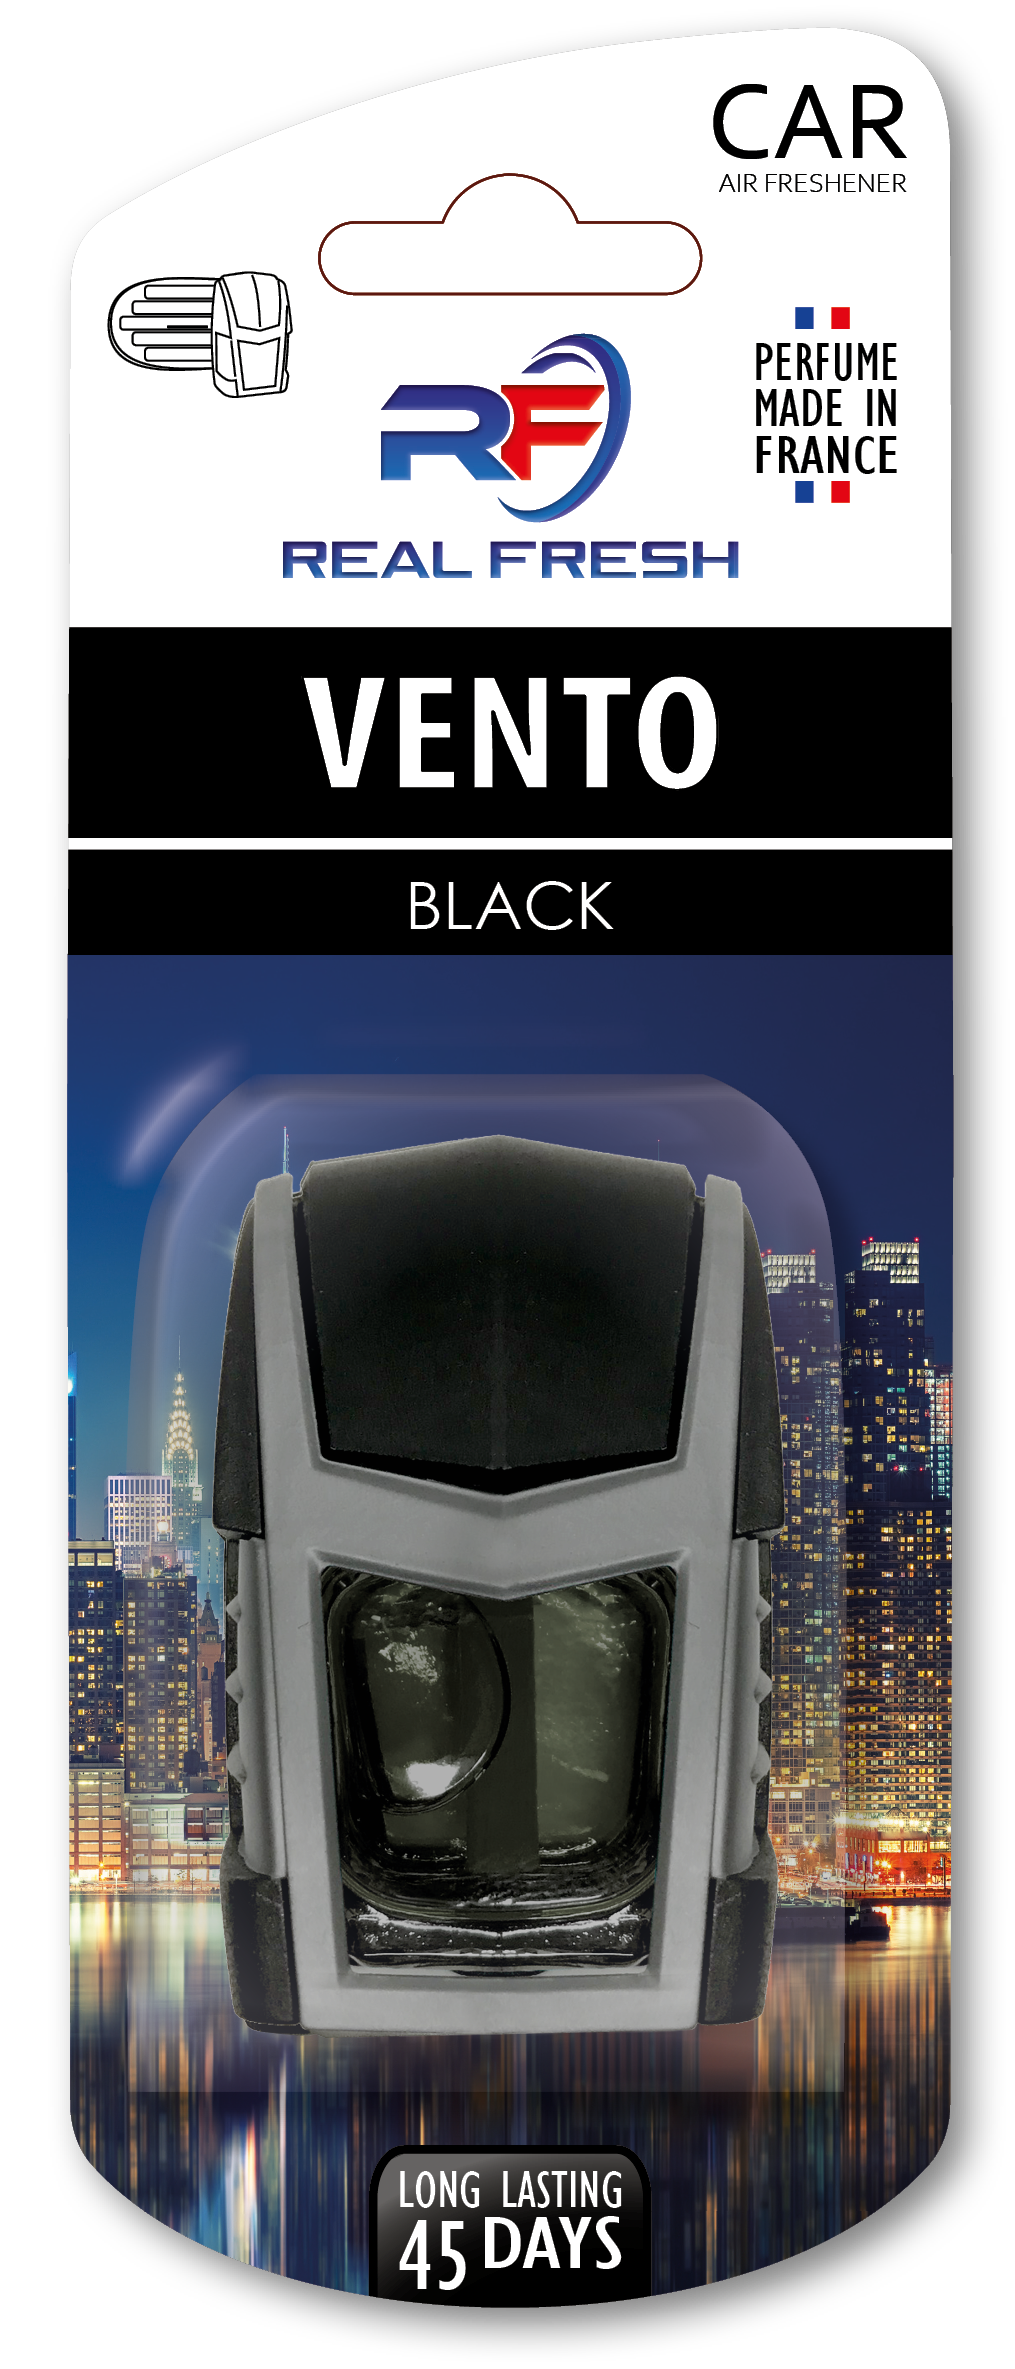 Vento Black Image